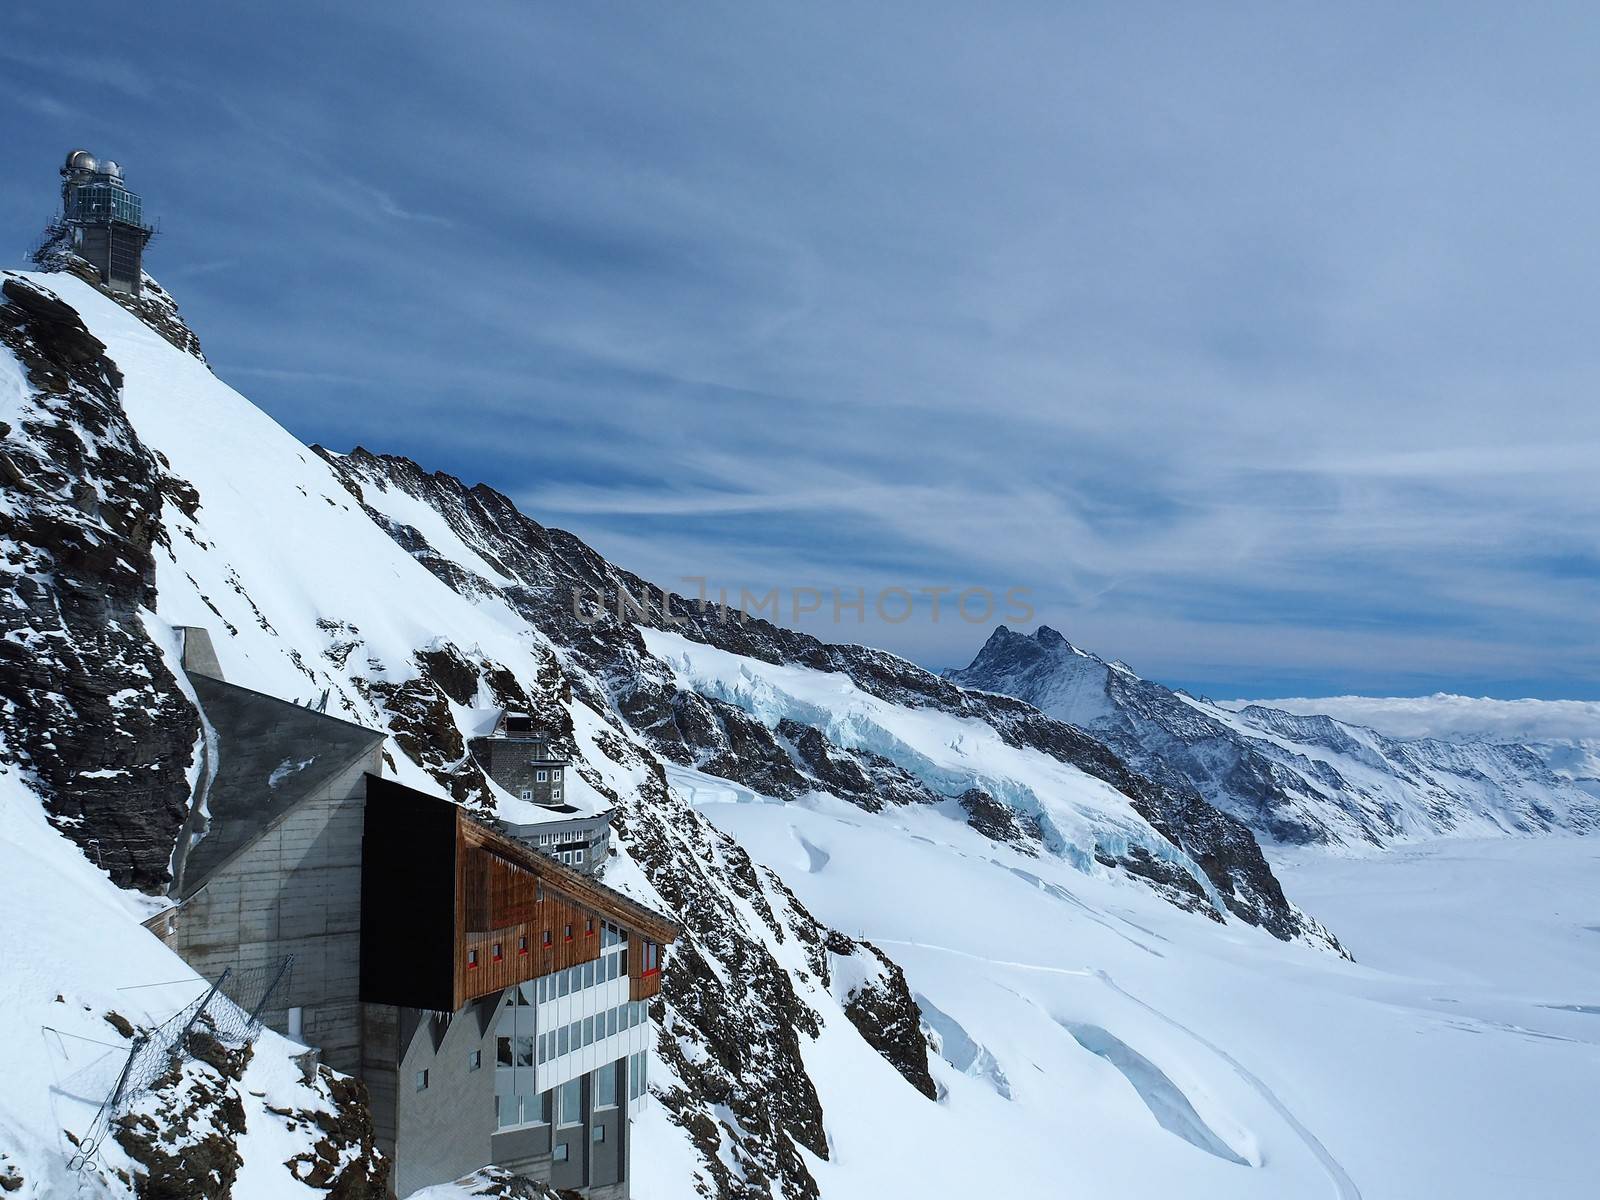 Sphinx Observatory, Jungfrau Plateau, Switzerland by WernBkk